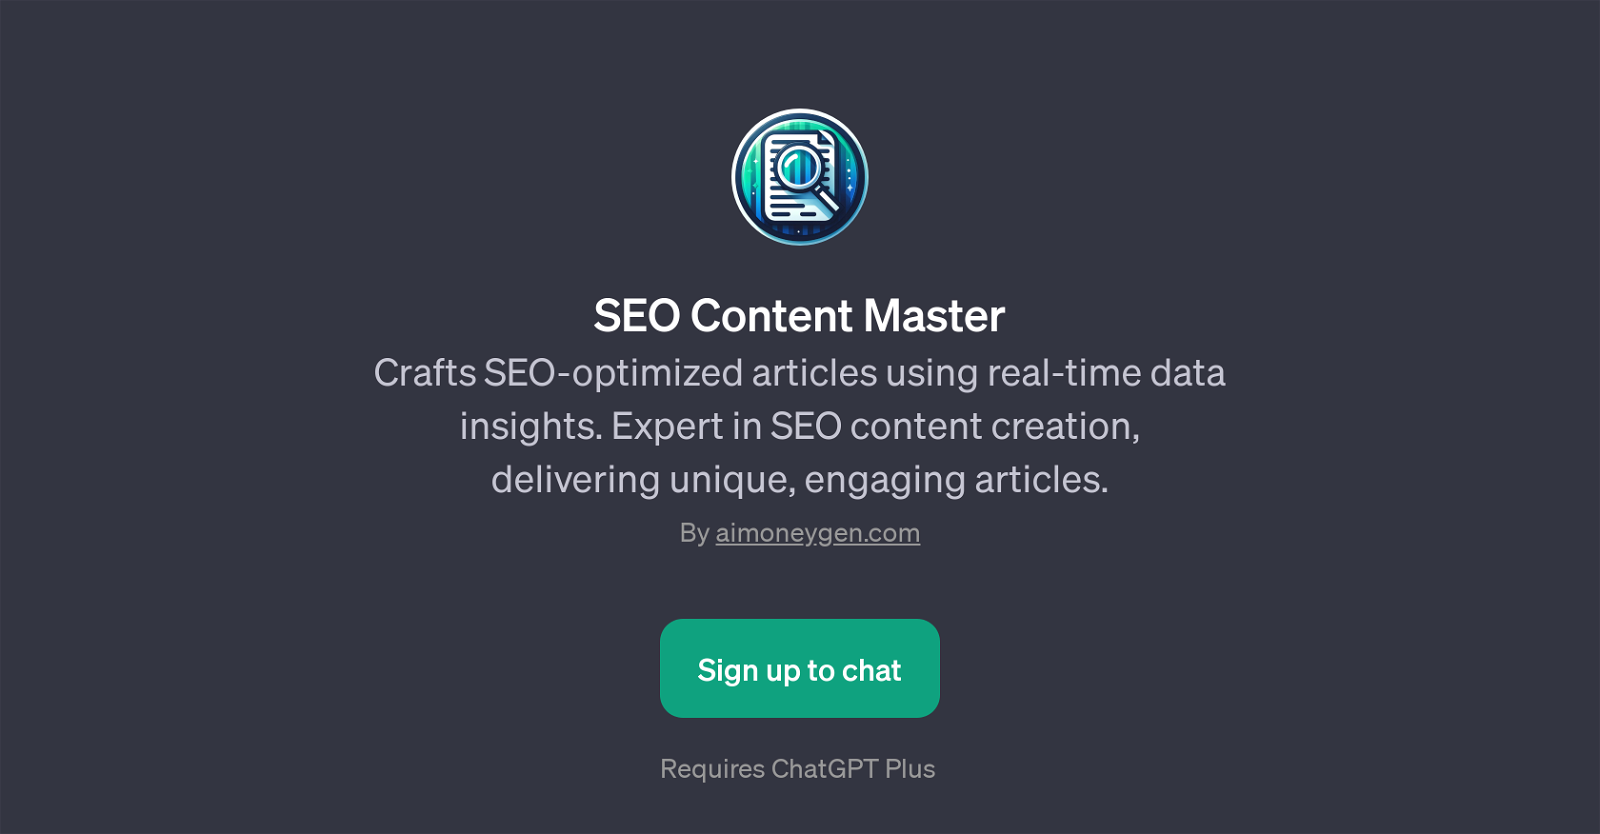 SEO Content Master website